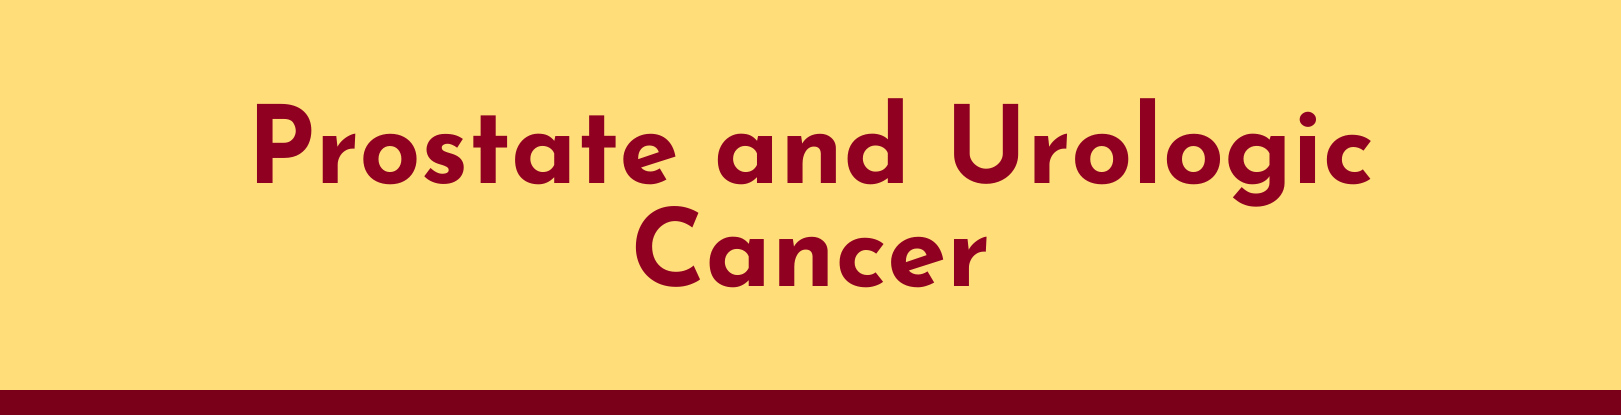 Prostate and Urologic Cancer